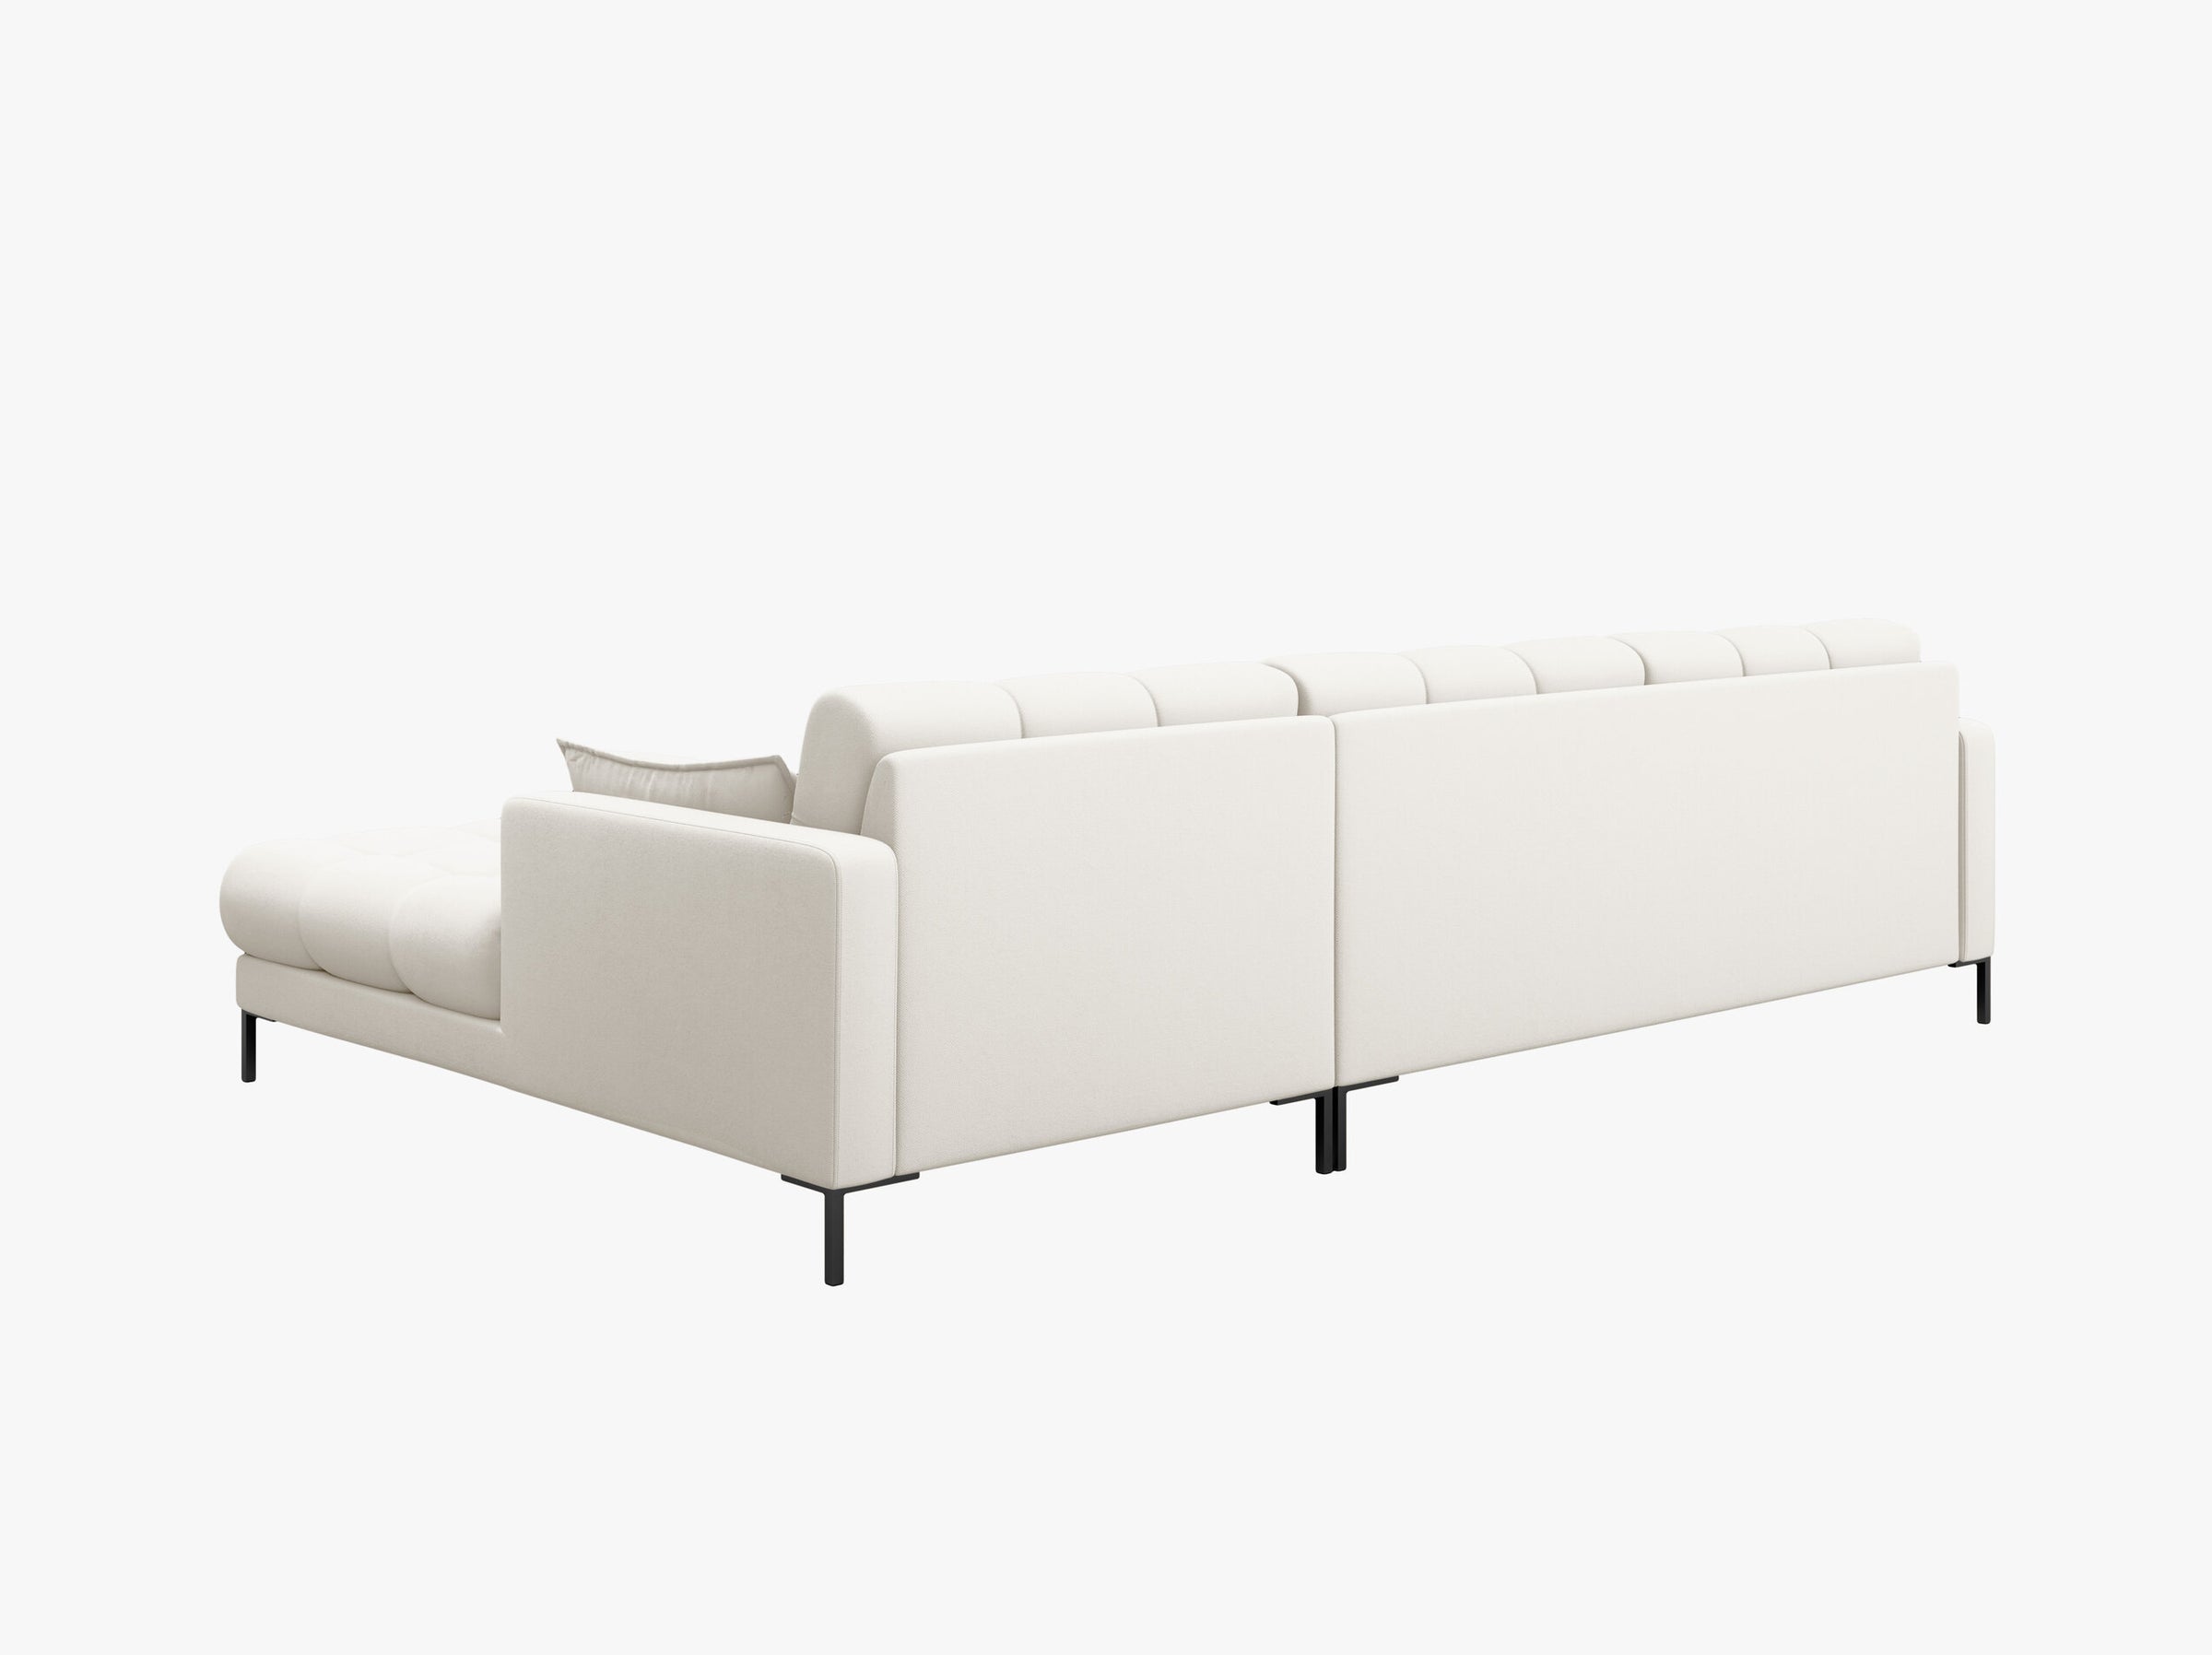 Mamaia sofas structured fabric light beige